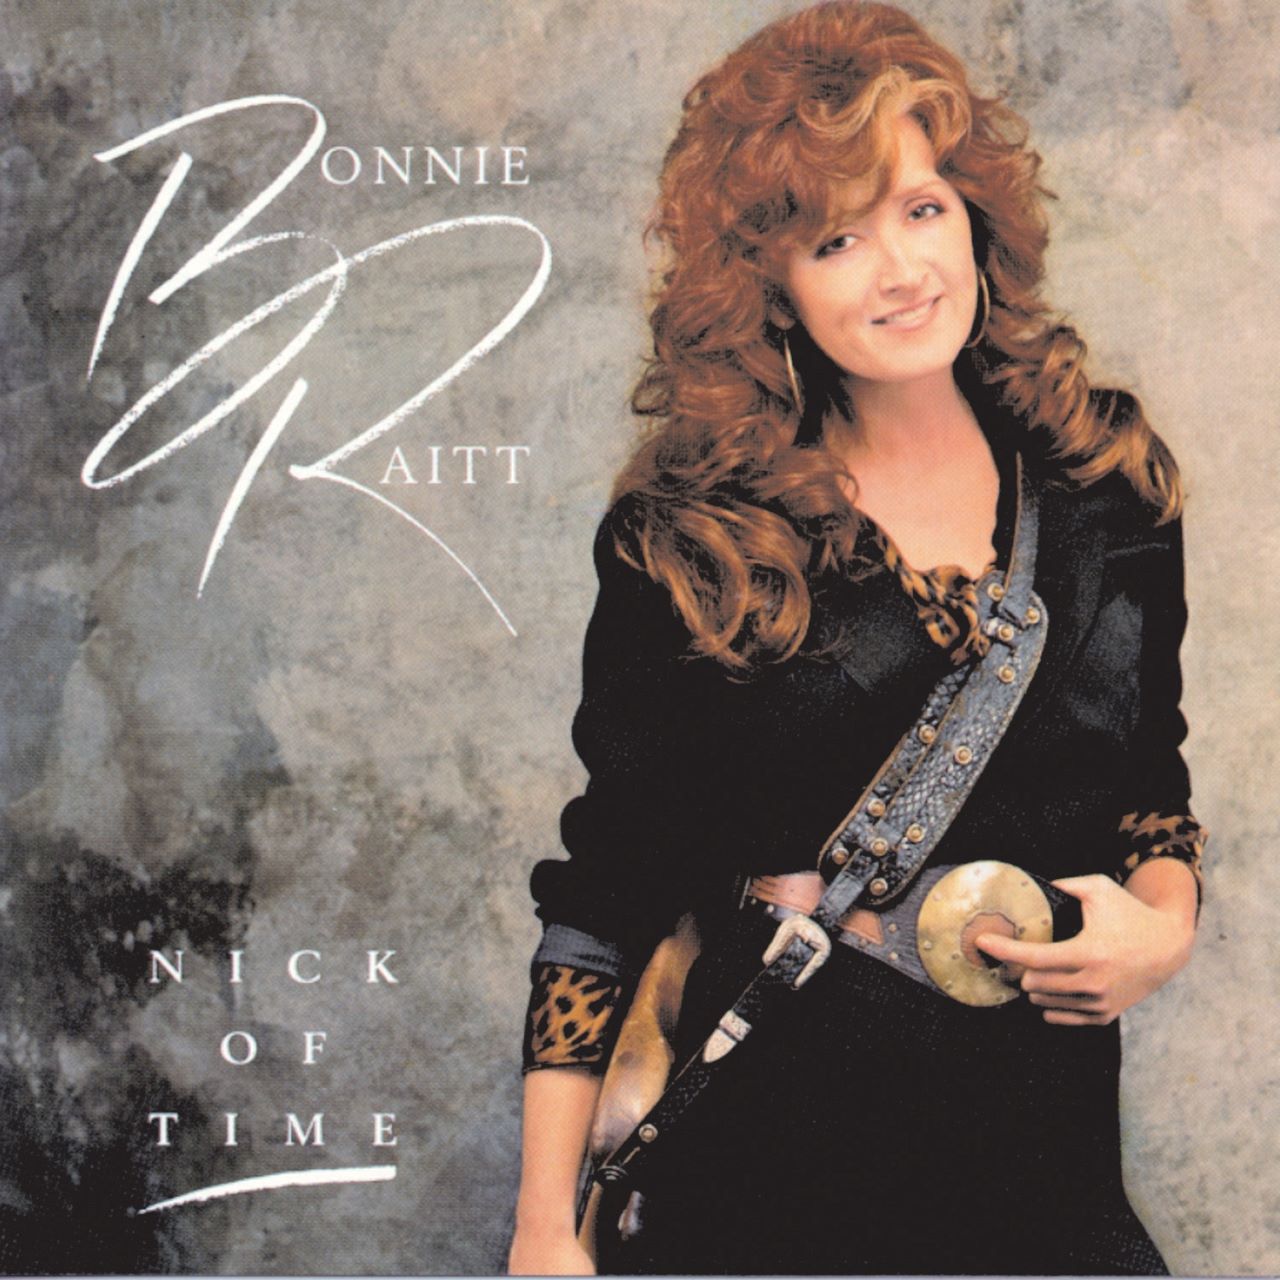 Bonnie Raitt - Nick Of Time cover album